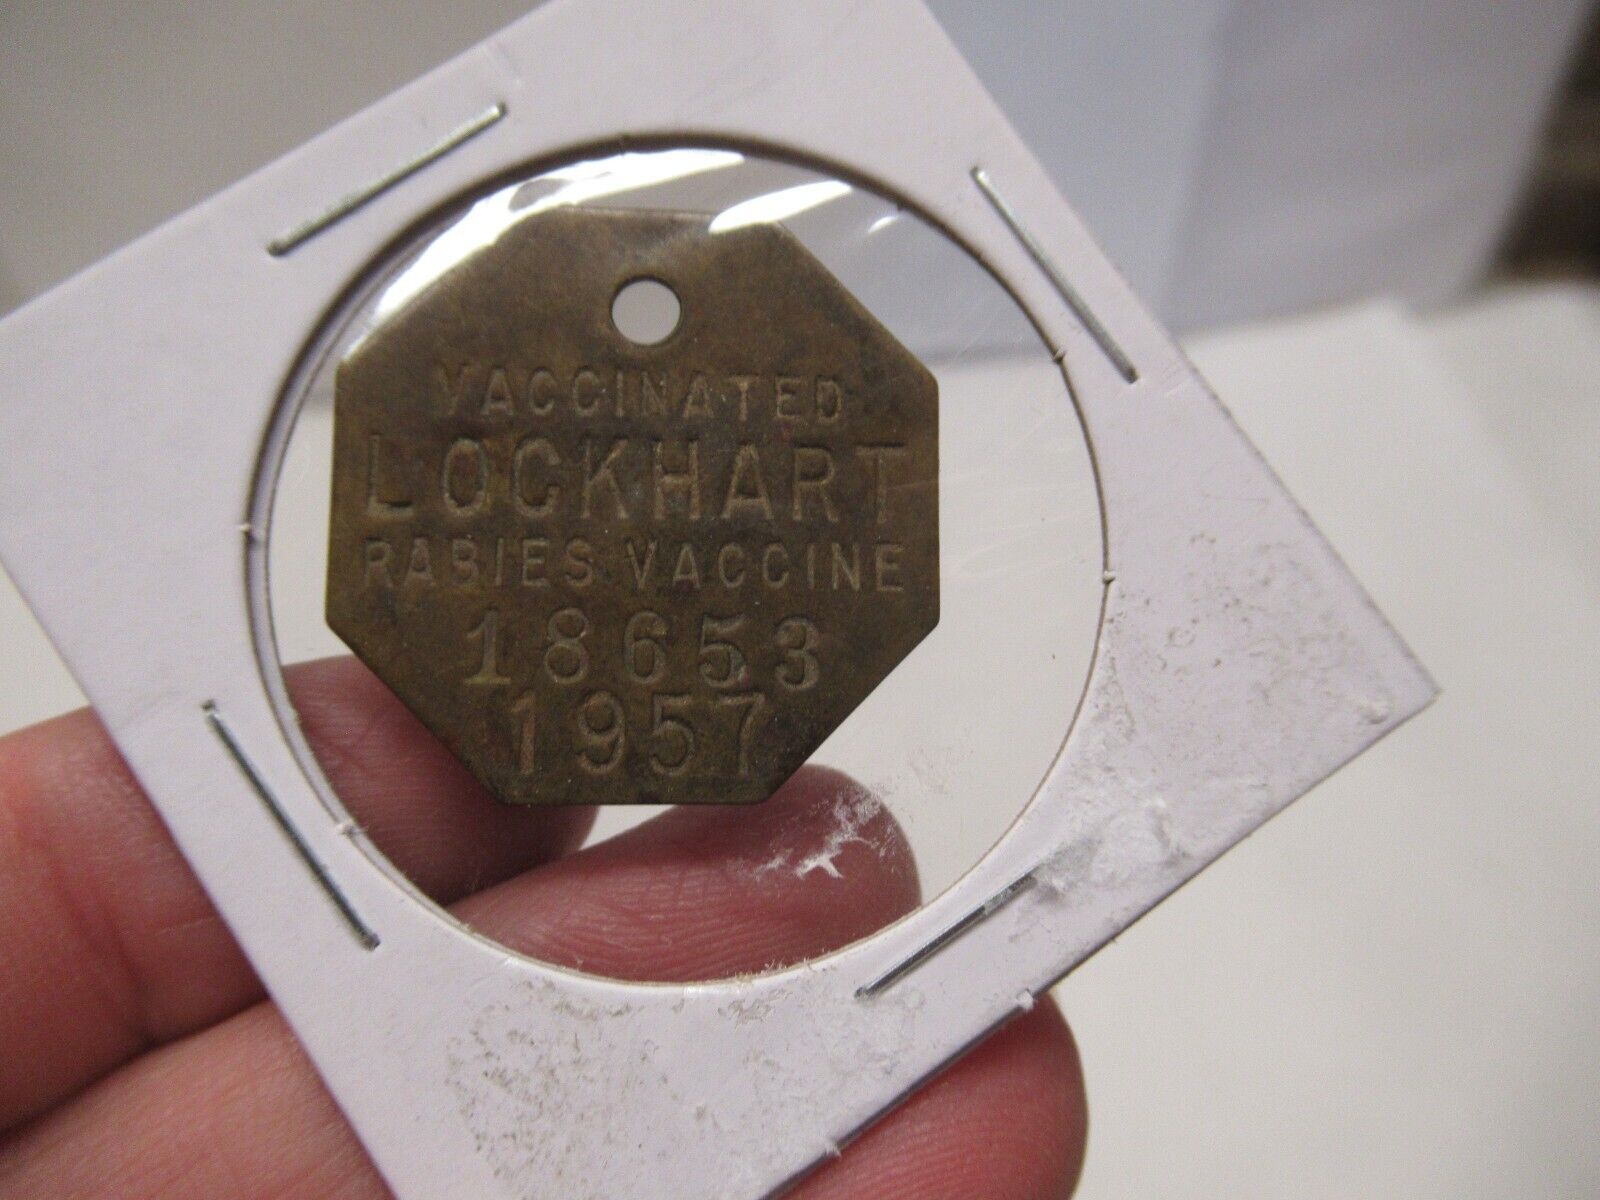 1957 - LOCKHART - RABIES VACCINE - VACCINATED - 18653 - vintage metal TAG